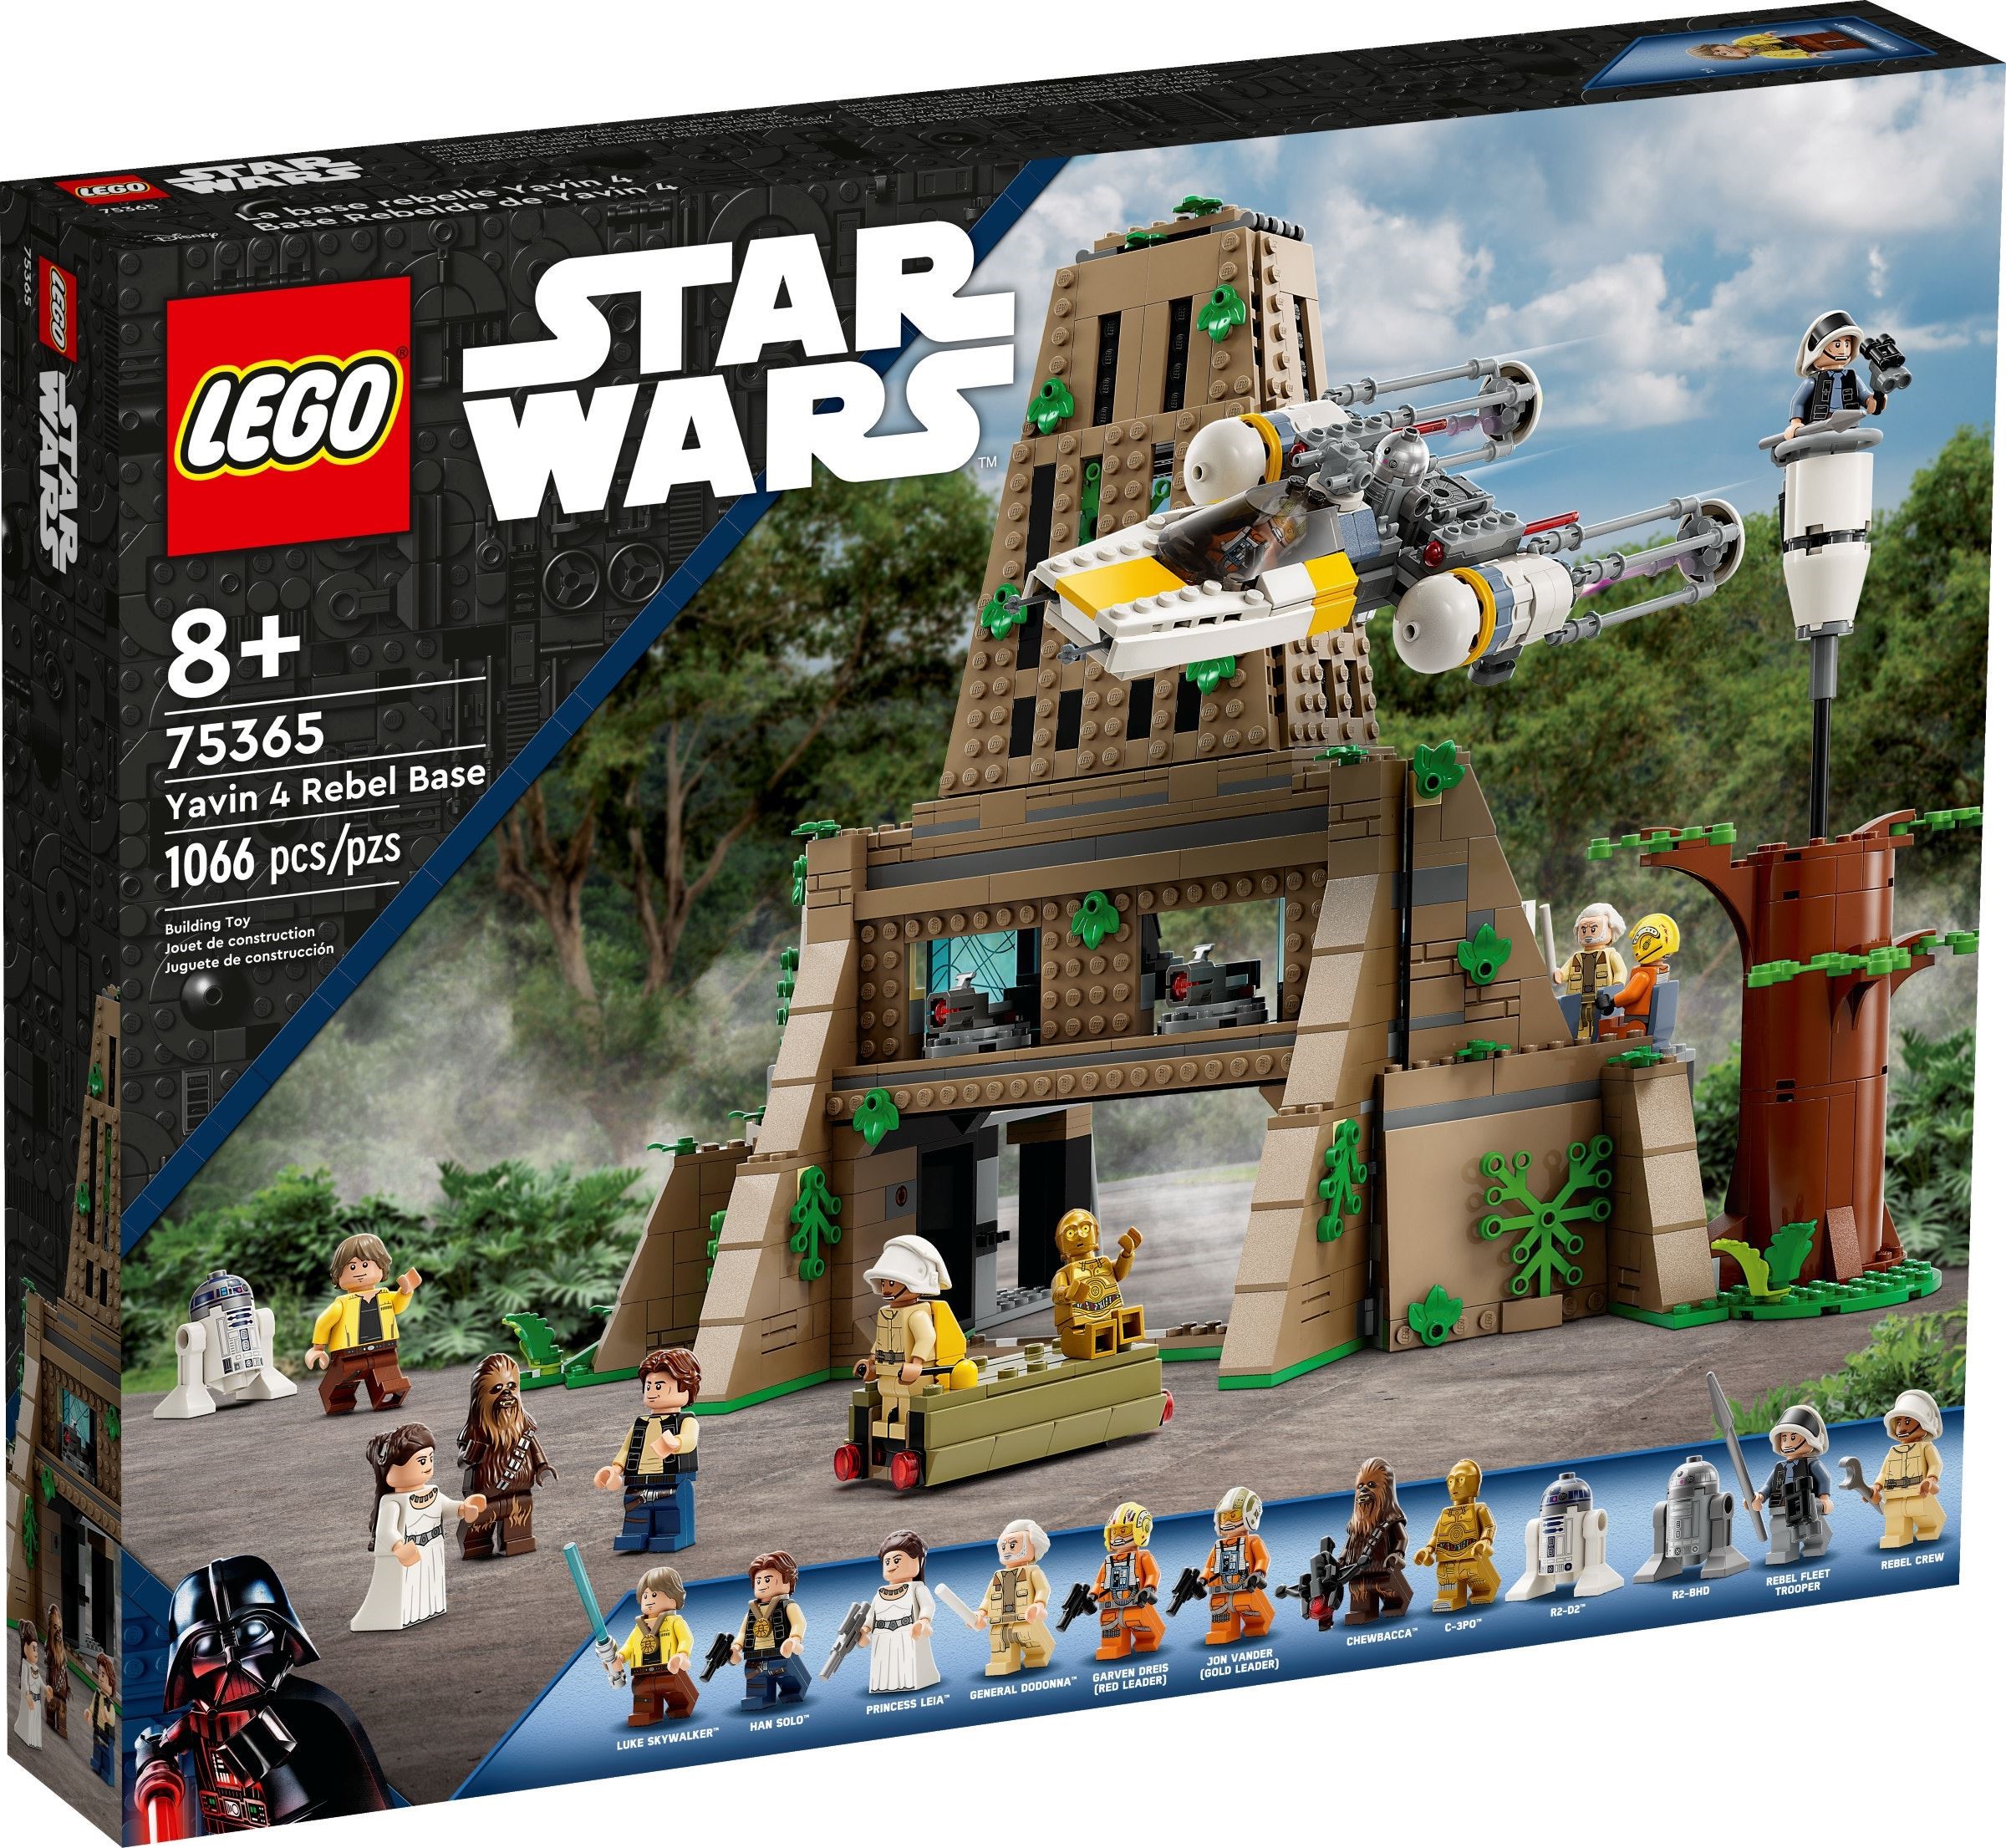 Lego 75365 Yavin 4 Rebel Base - Lego Star Wars set for sale best price